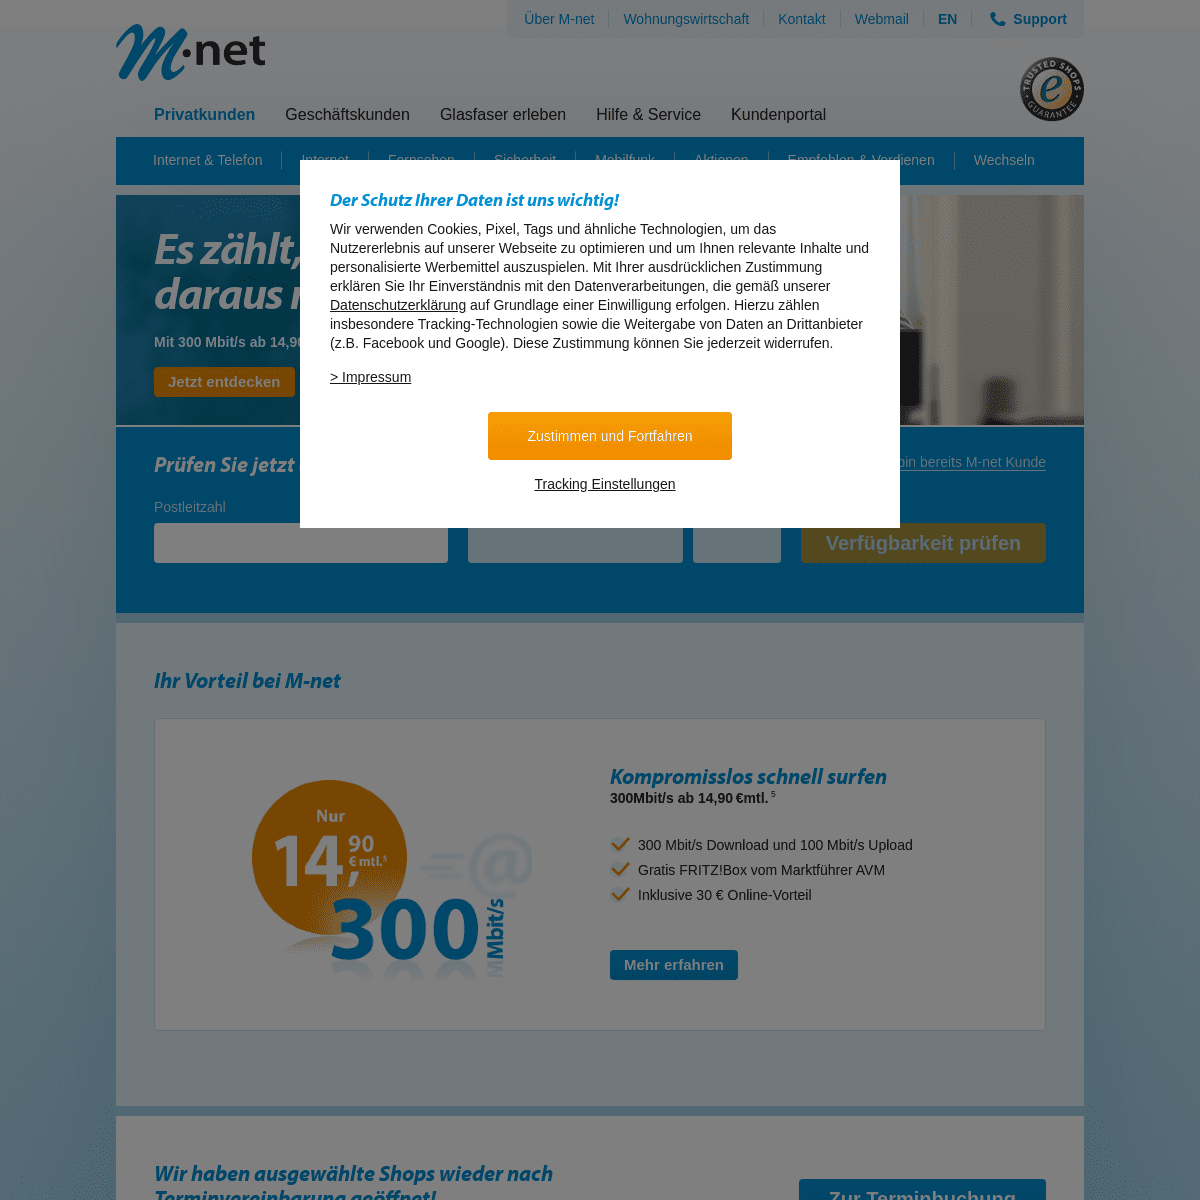 A complete backup of https://m-net.de